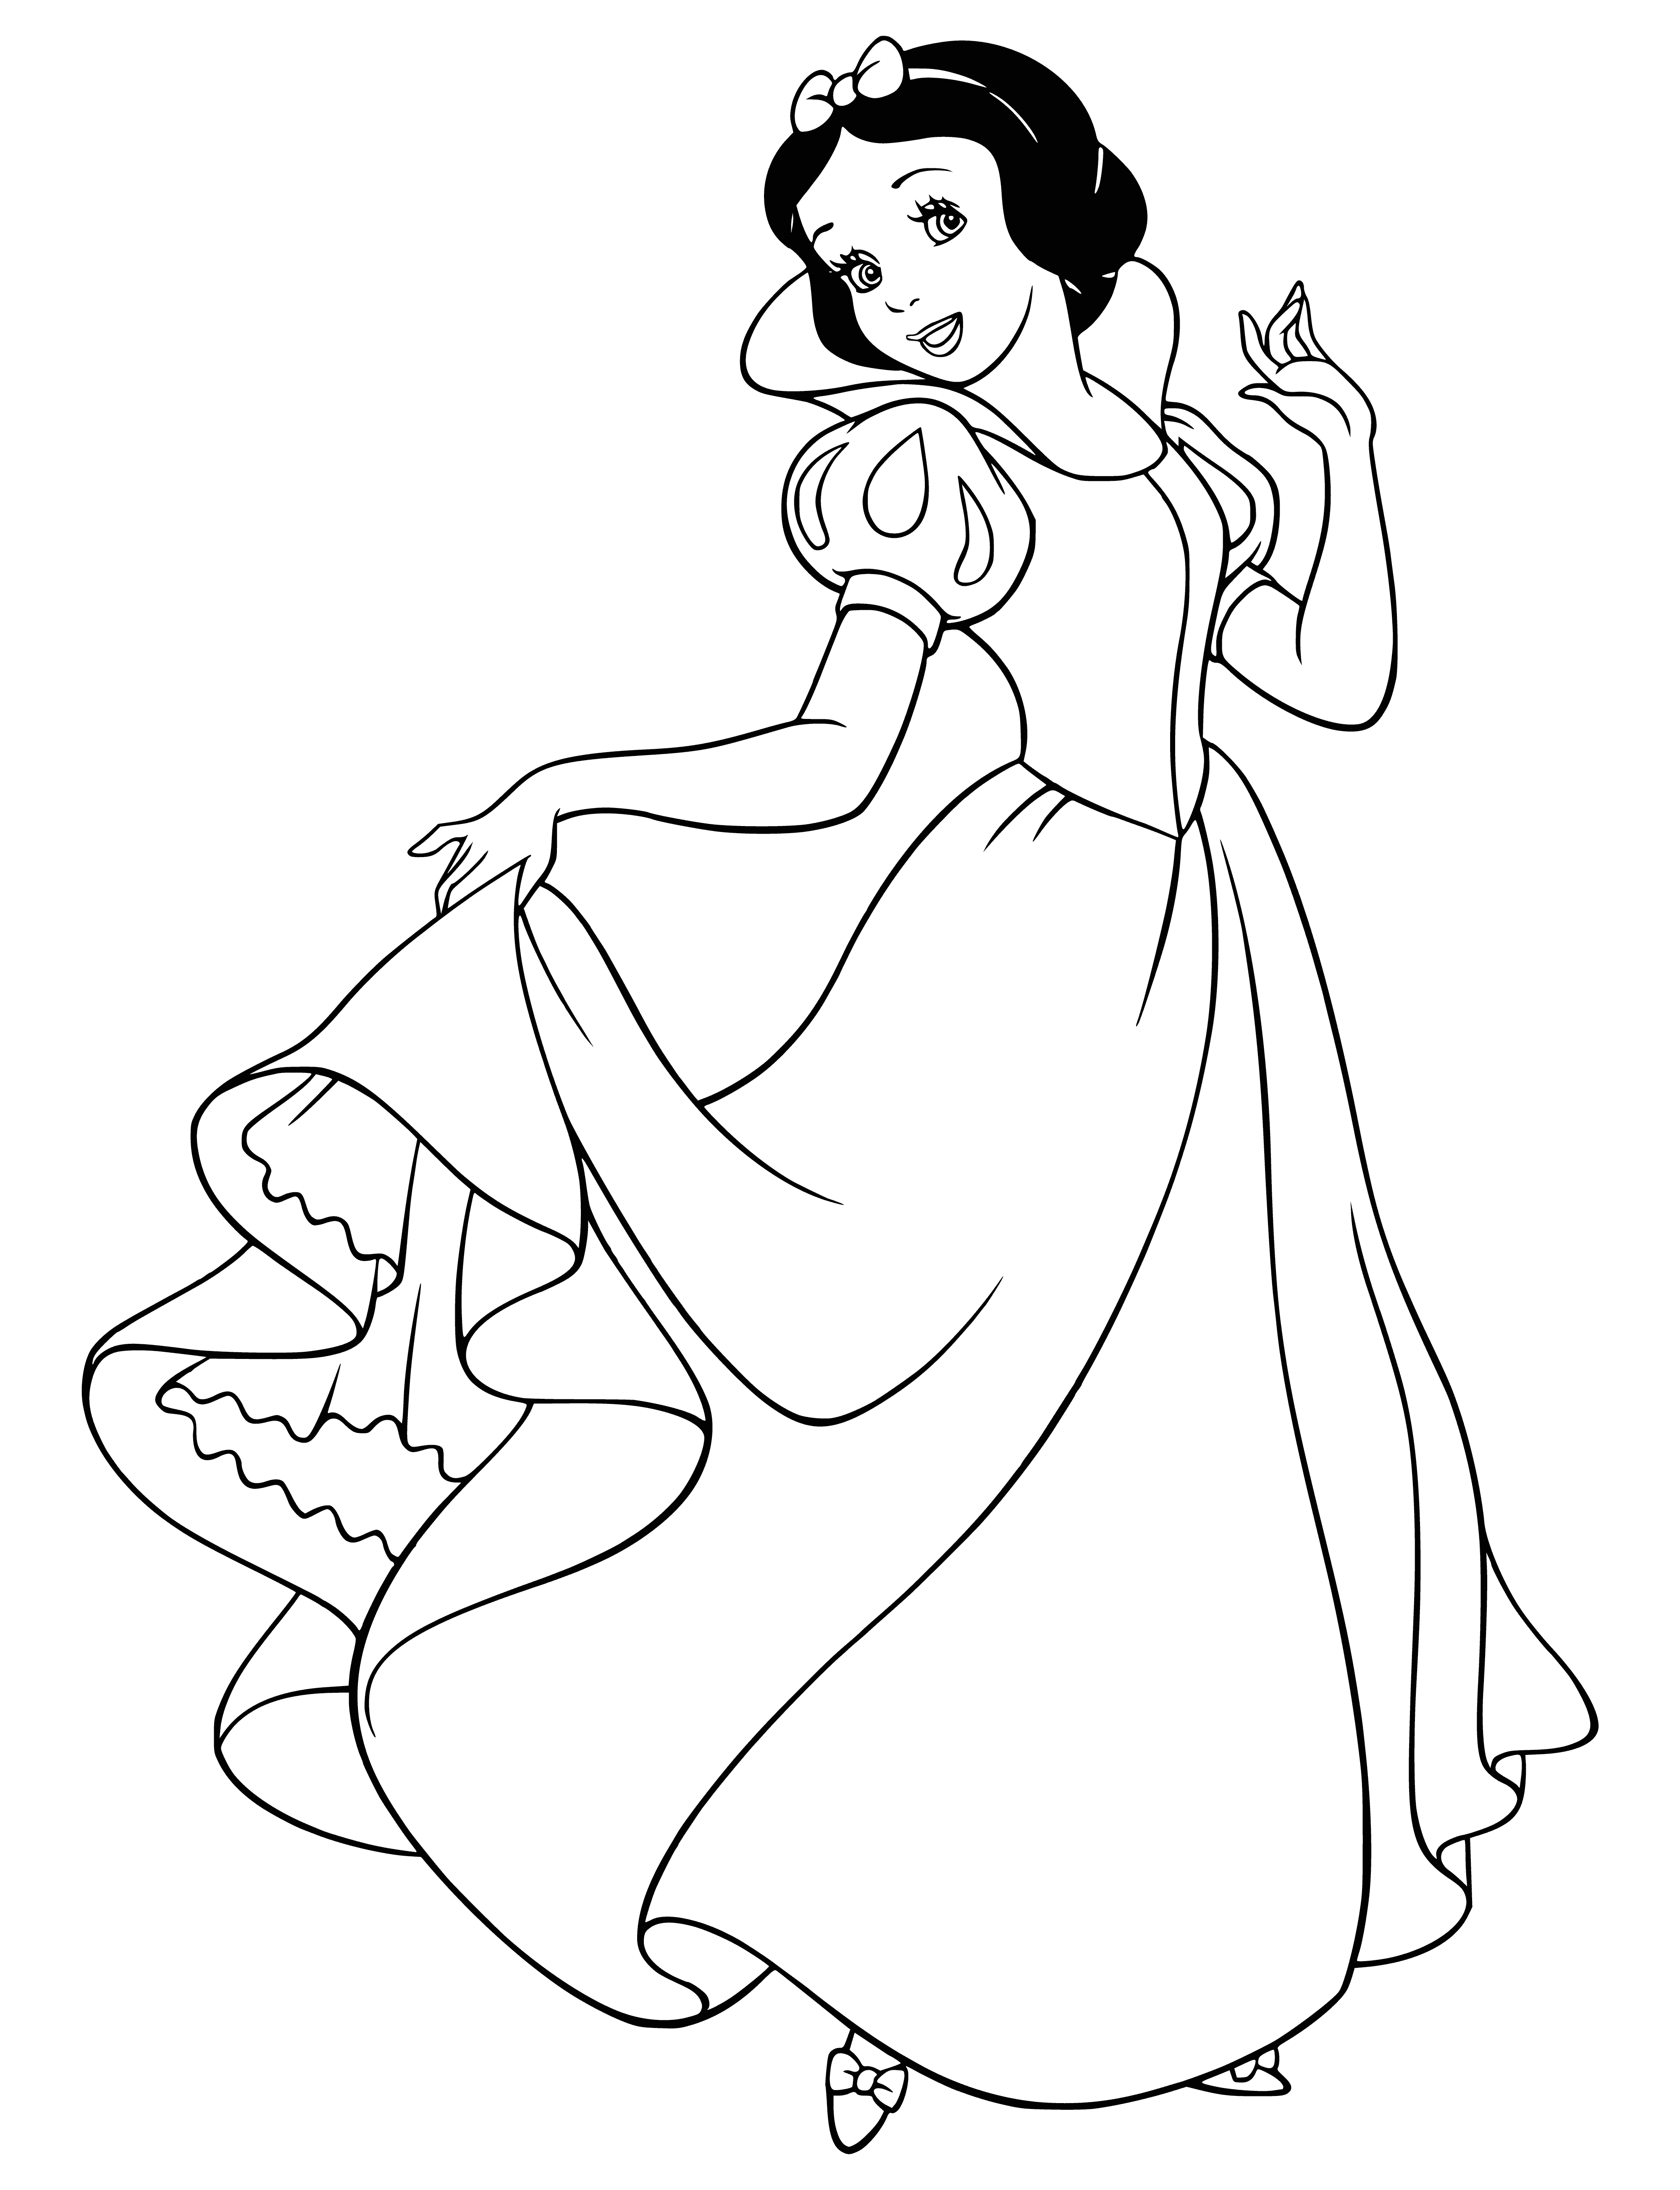 Princess Snow White coloring page